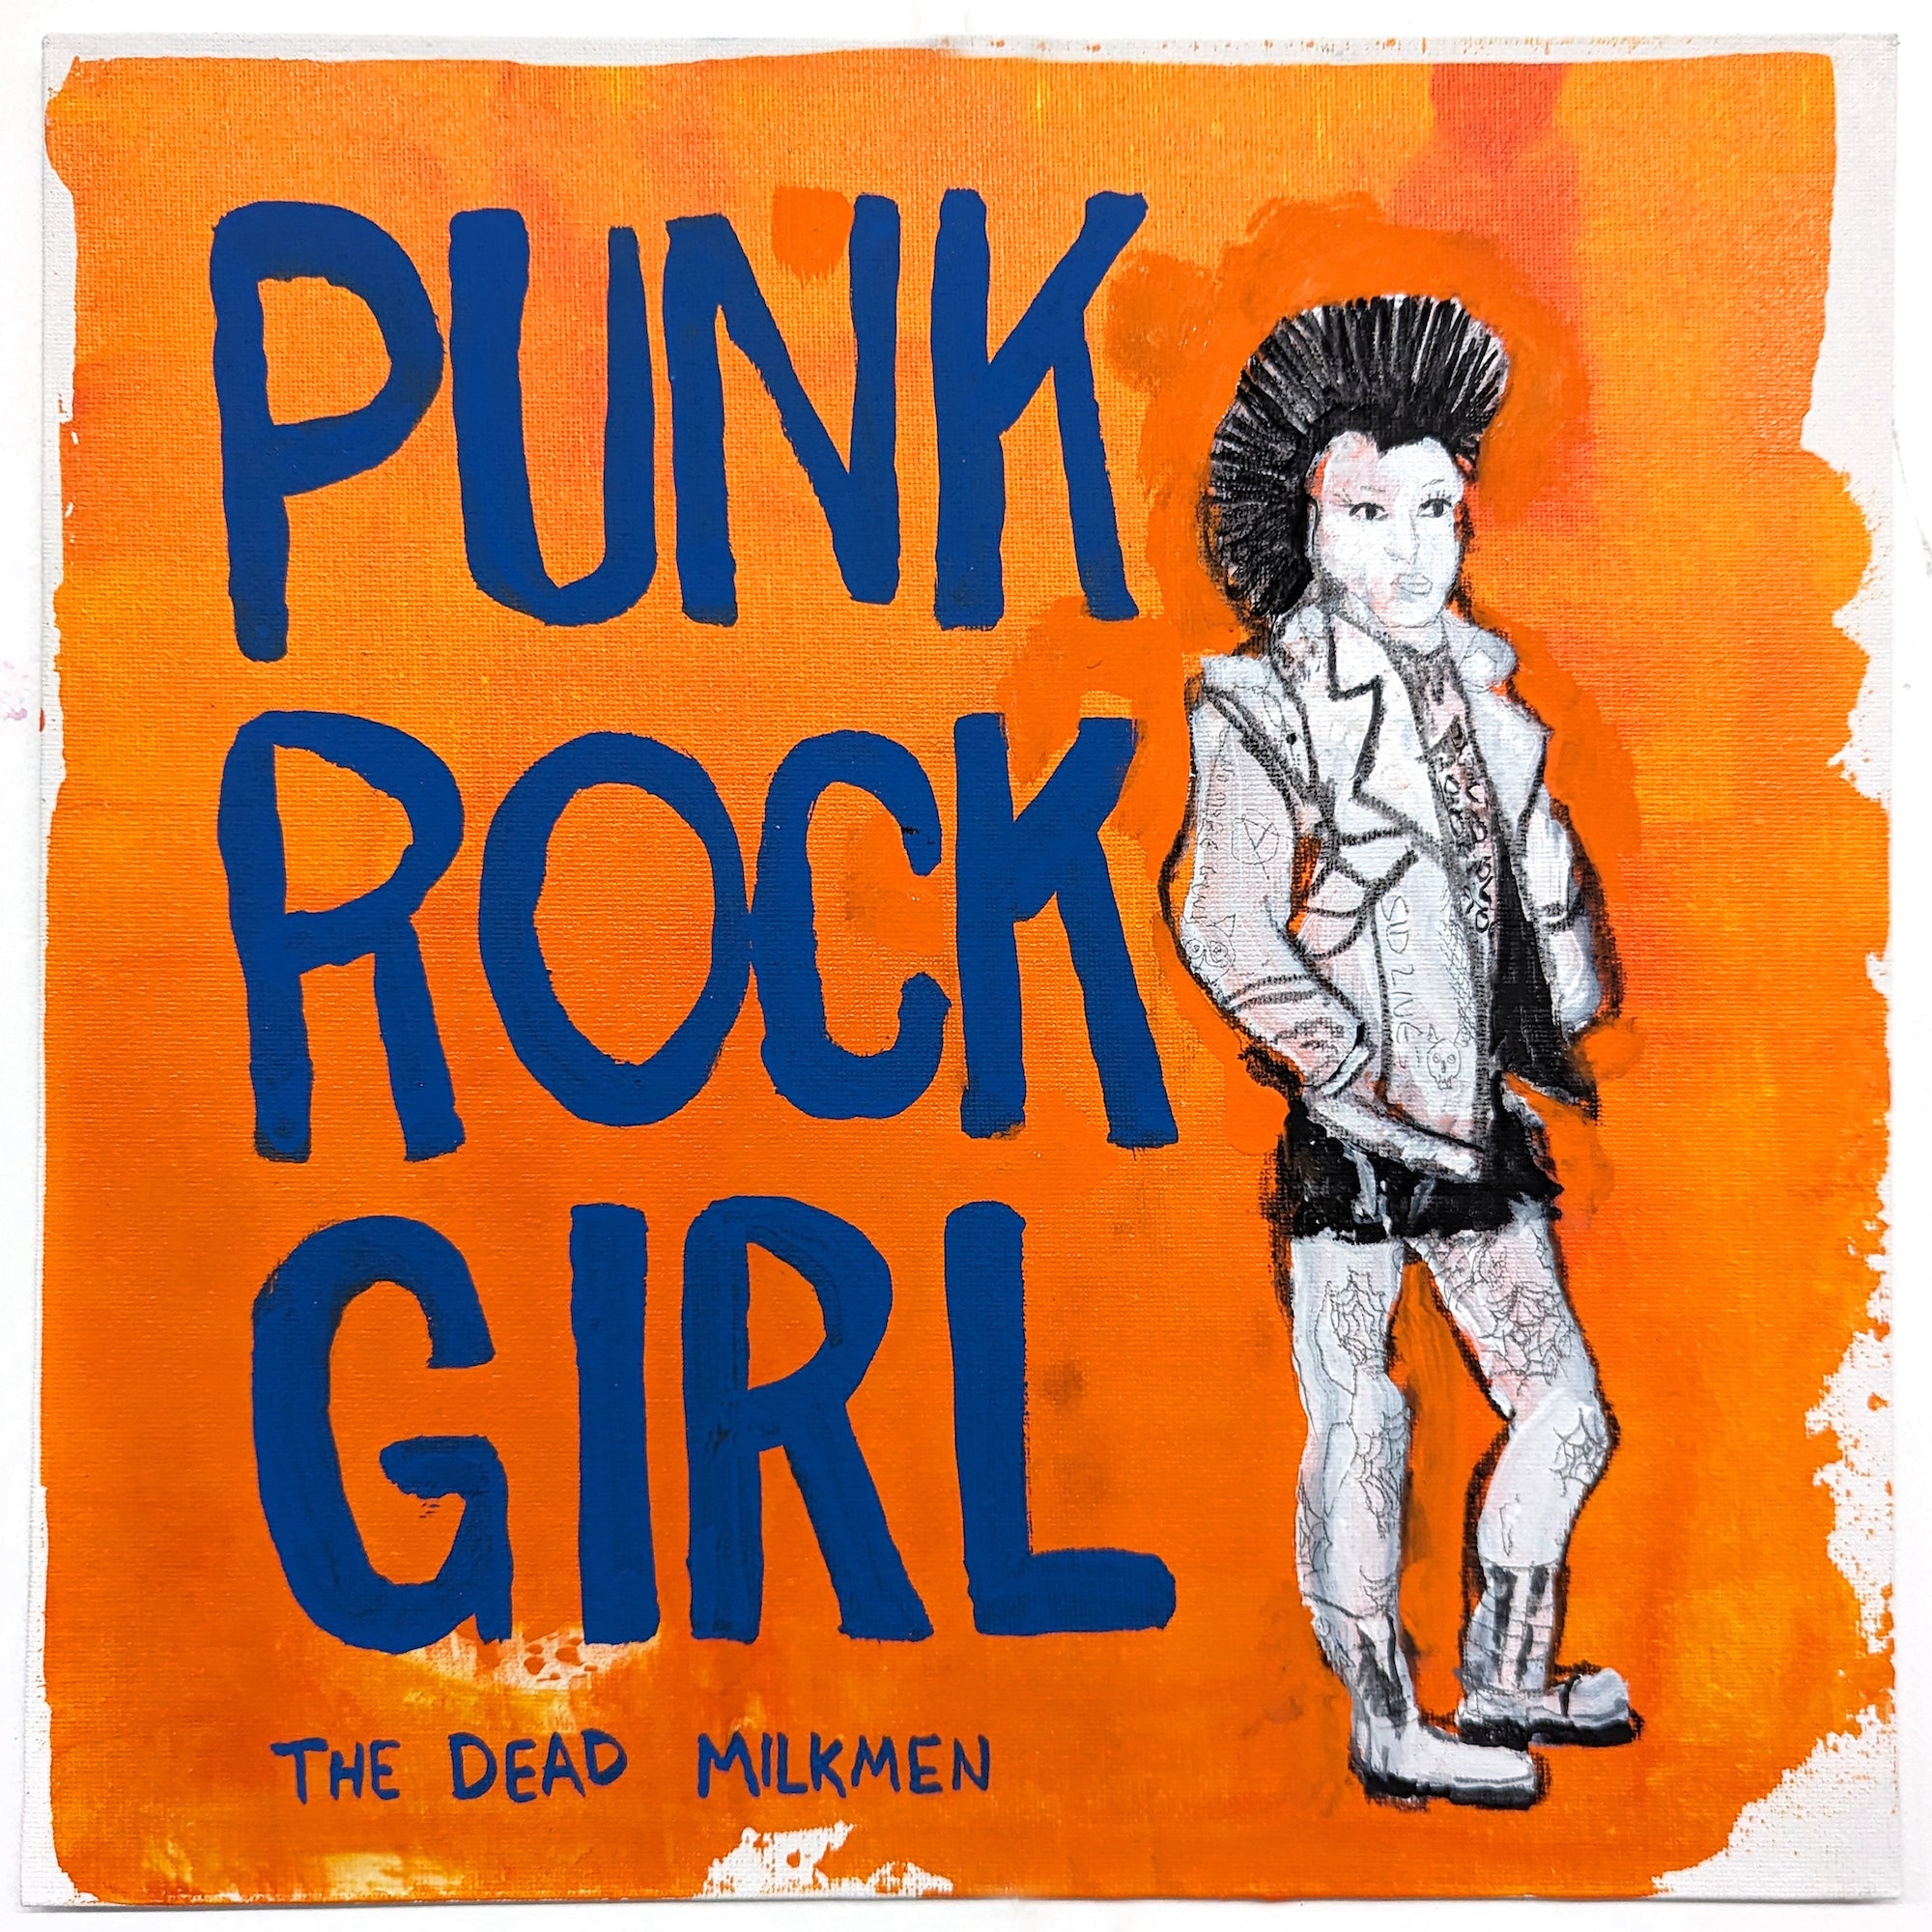 Jac Lahav, "The Dead Milkmen (Punk Rock Girl)"